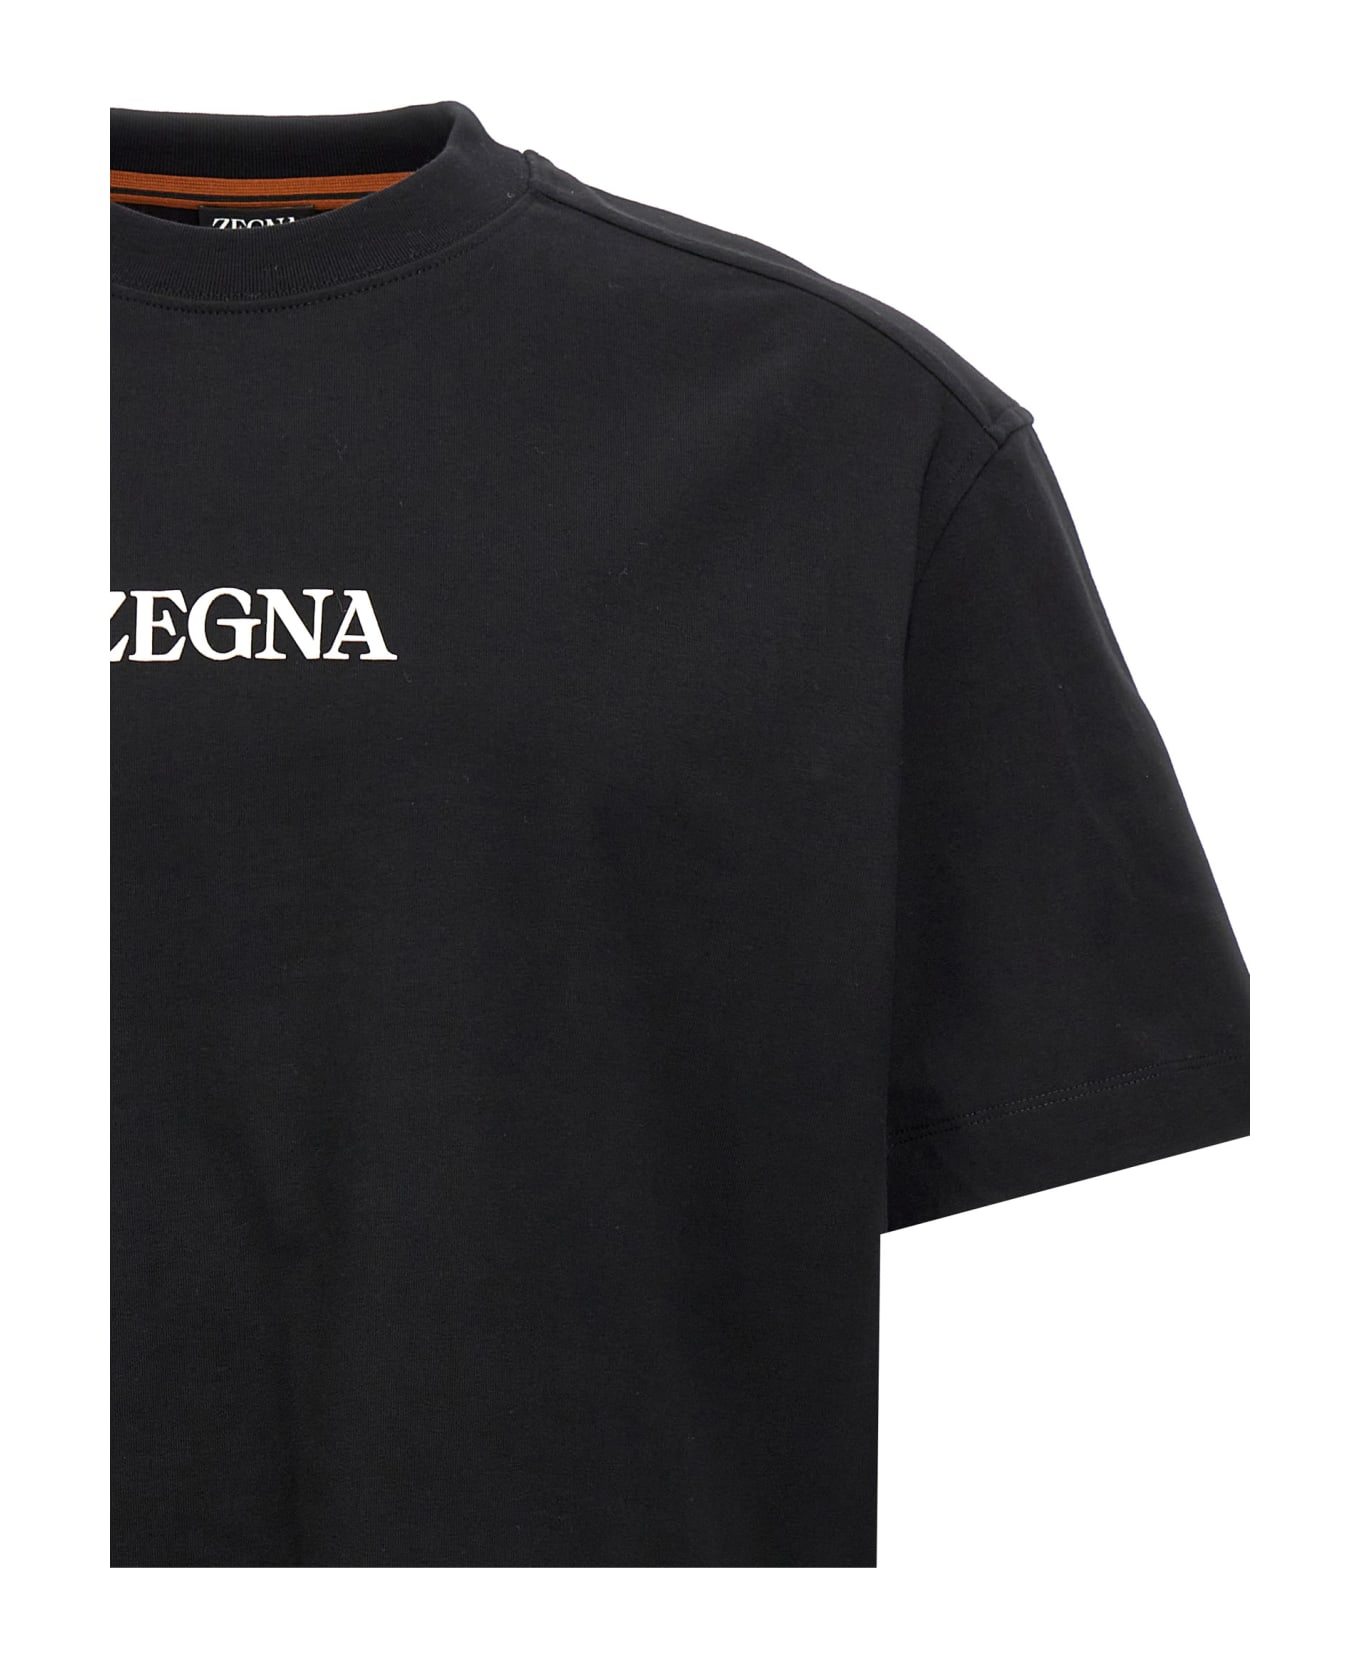 Zegna Rubberized Logo T-shirt - White/Black シャツ